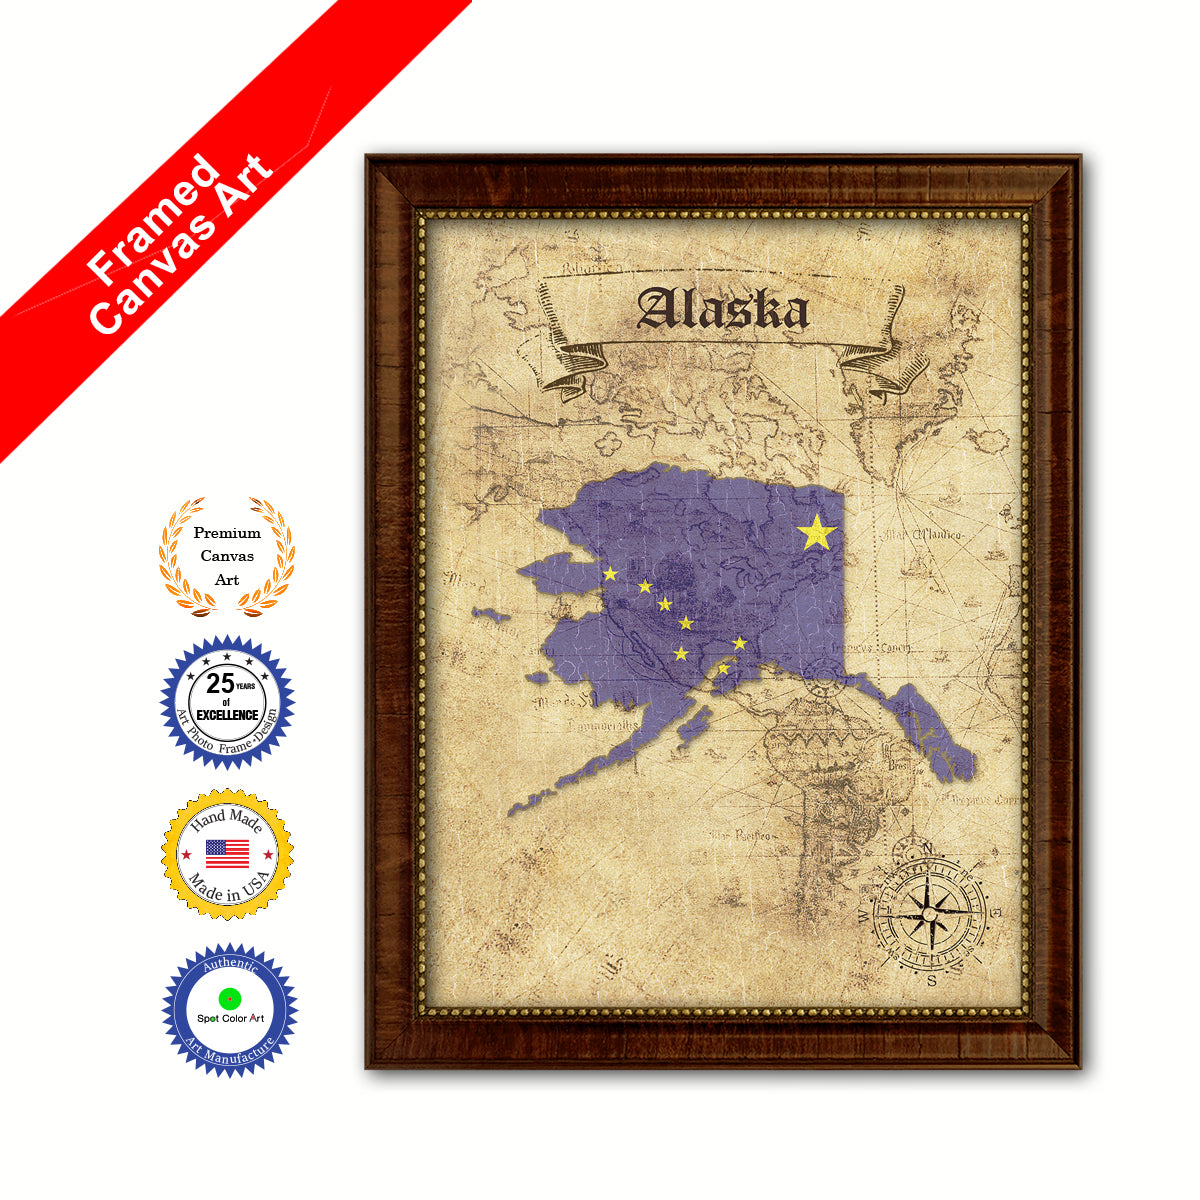 Alaska State Vintage Map Brown Framed Canvas Print Home Decor Wall Art